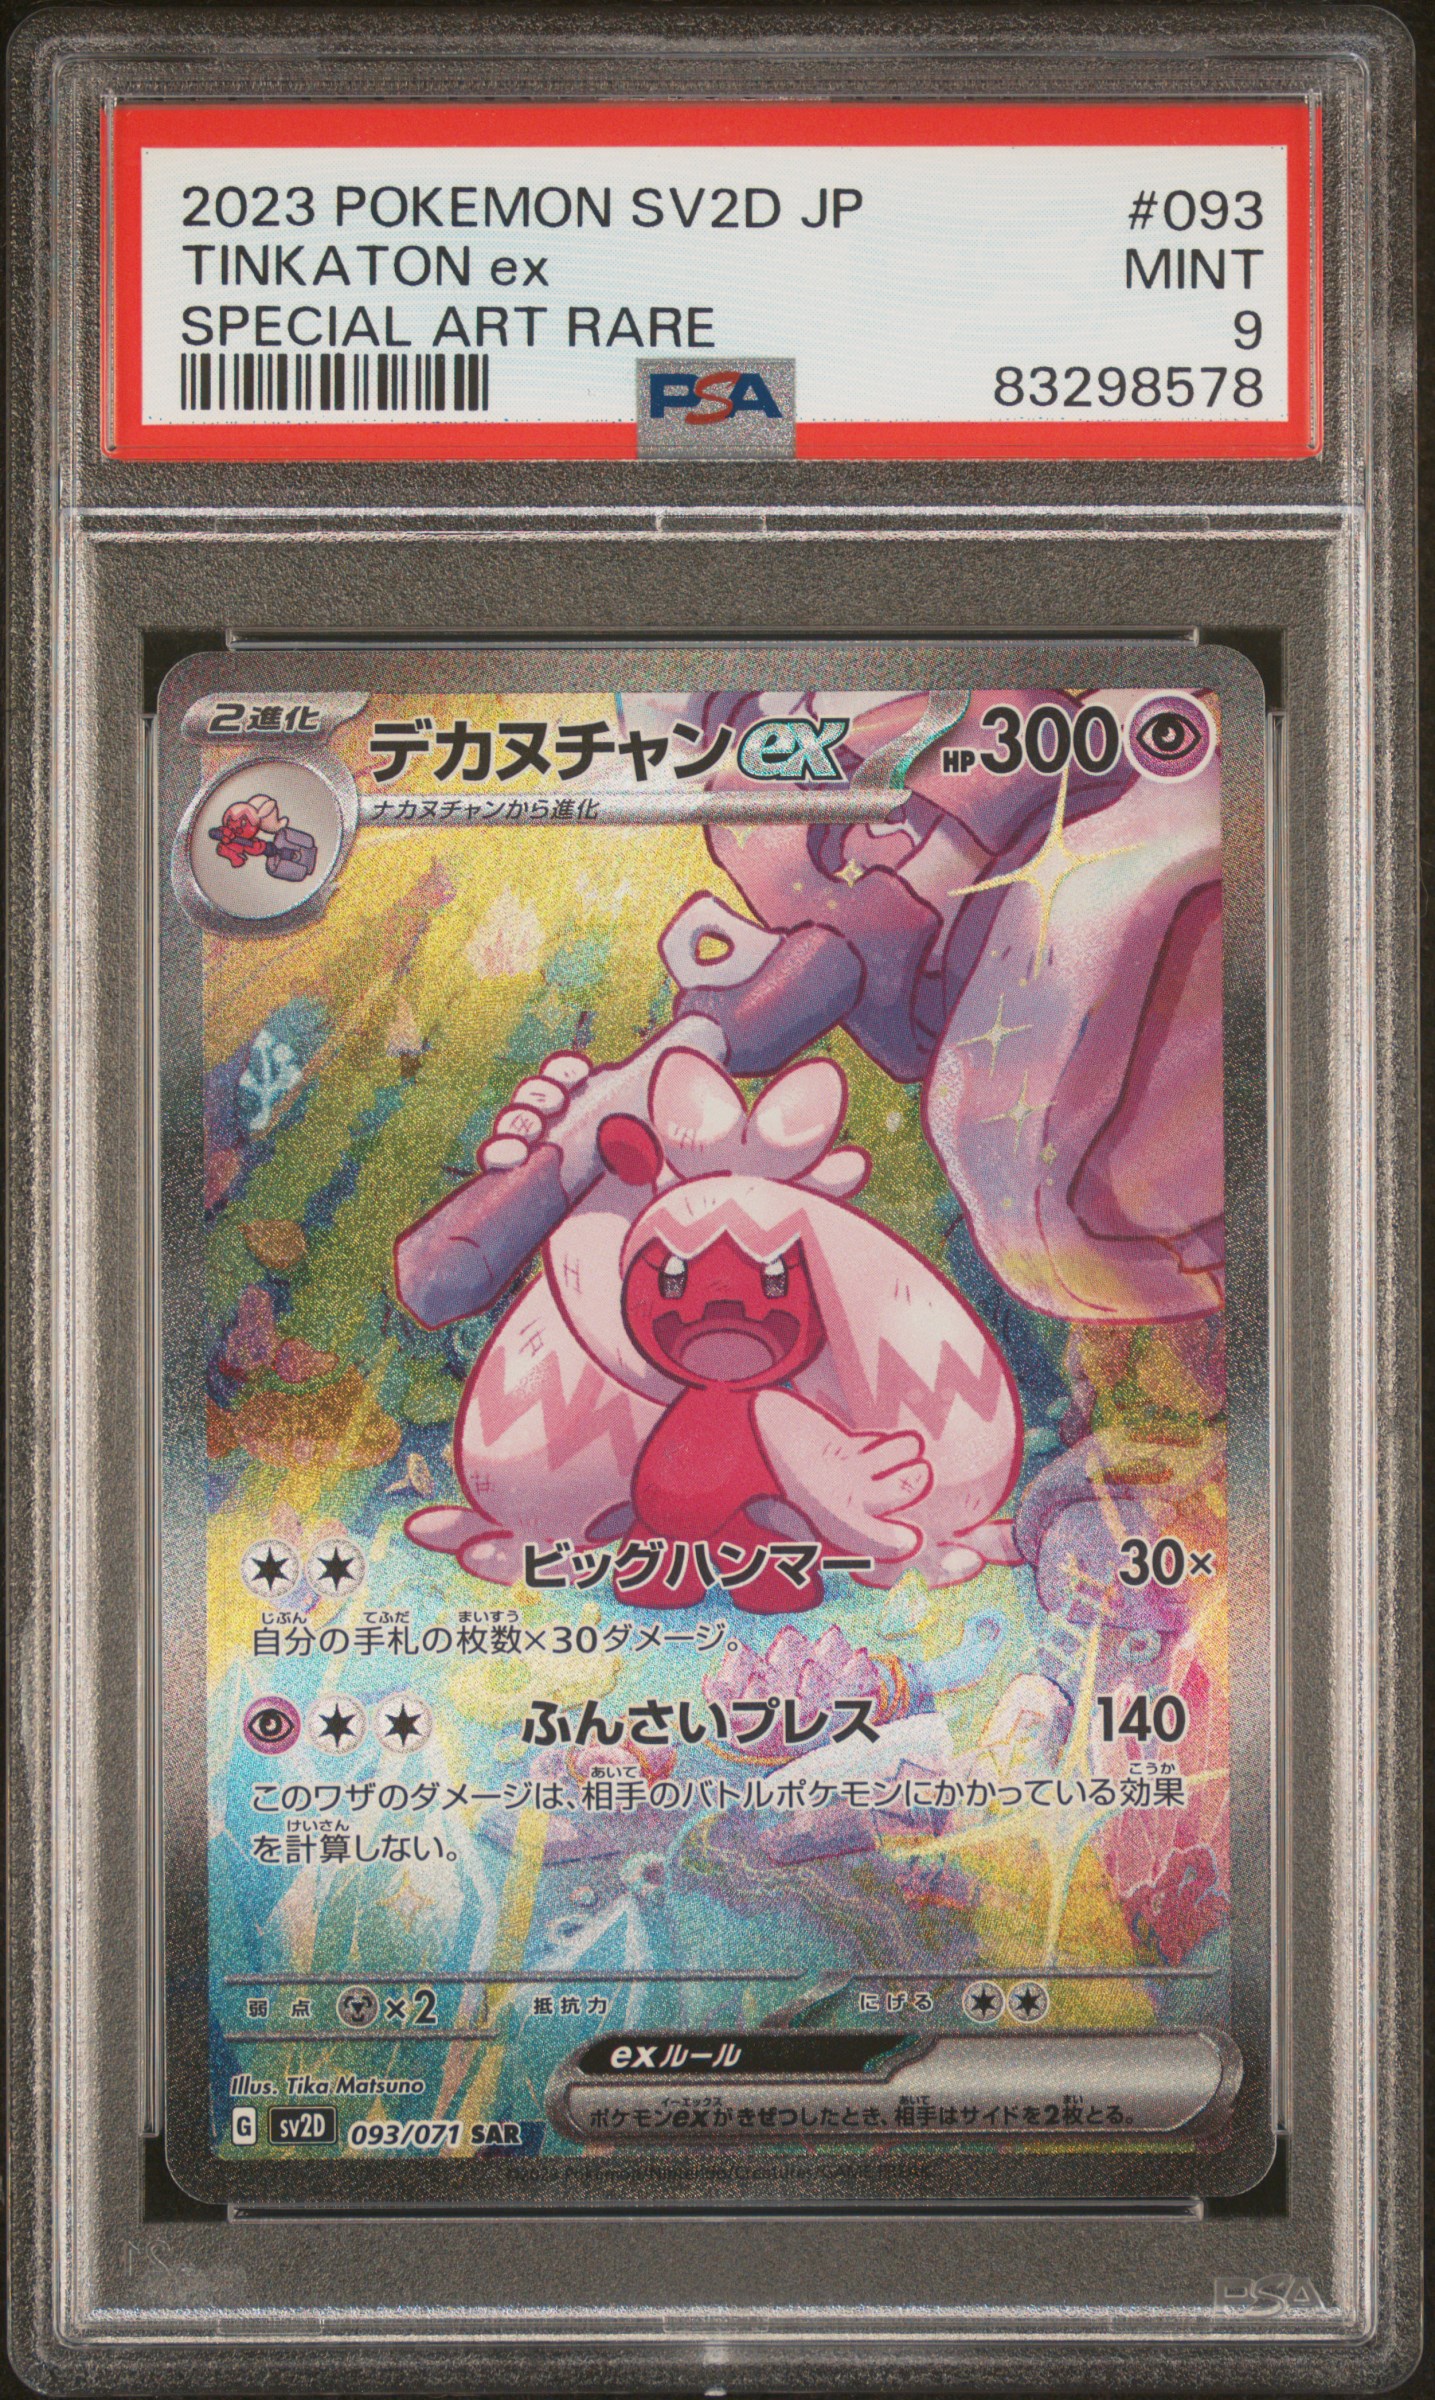 2023 Pokemon Japanese SV2D Clay Burst Special Art Rare #093 Tinkaton ex - PSA MINT 9